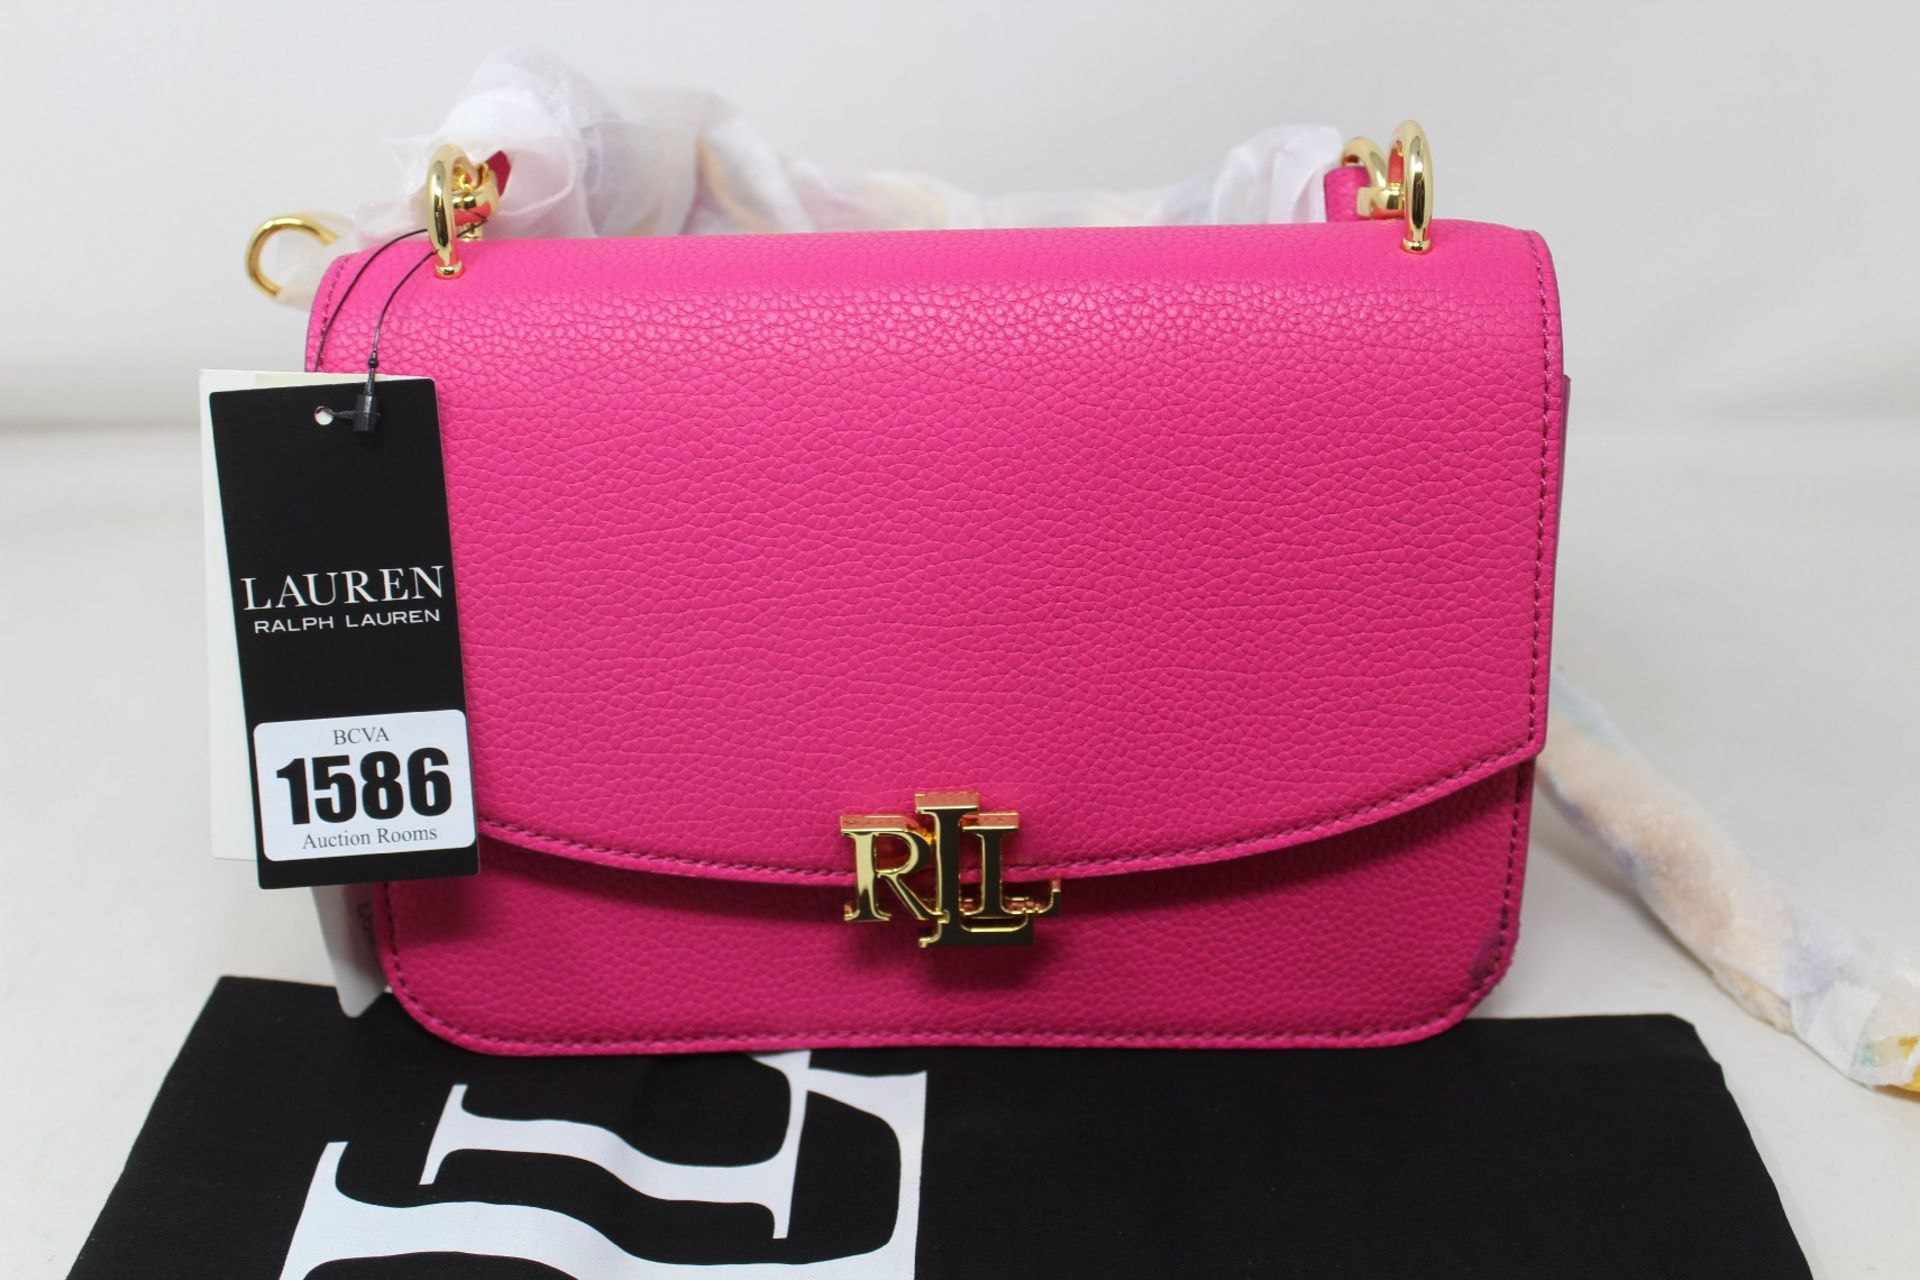 An as new Ralph Lauren Madison 22 bag in pink.